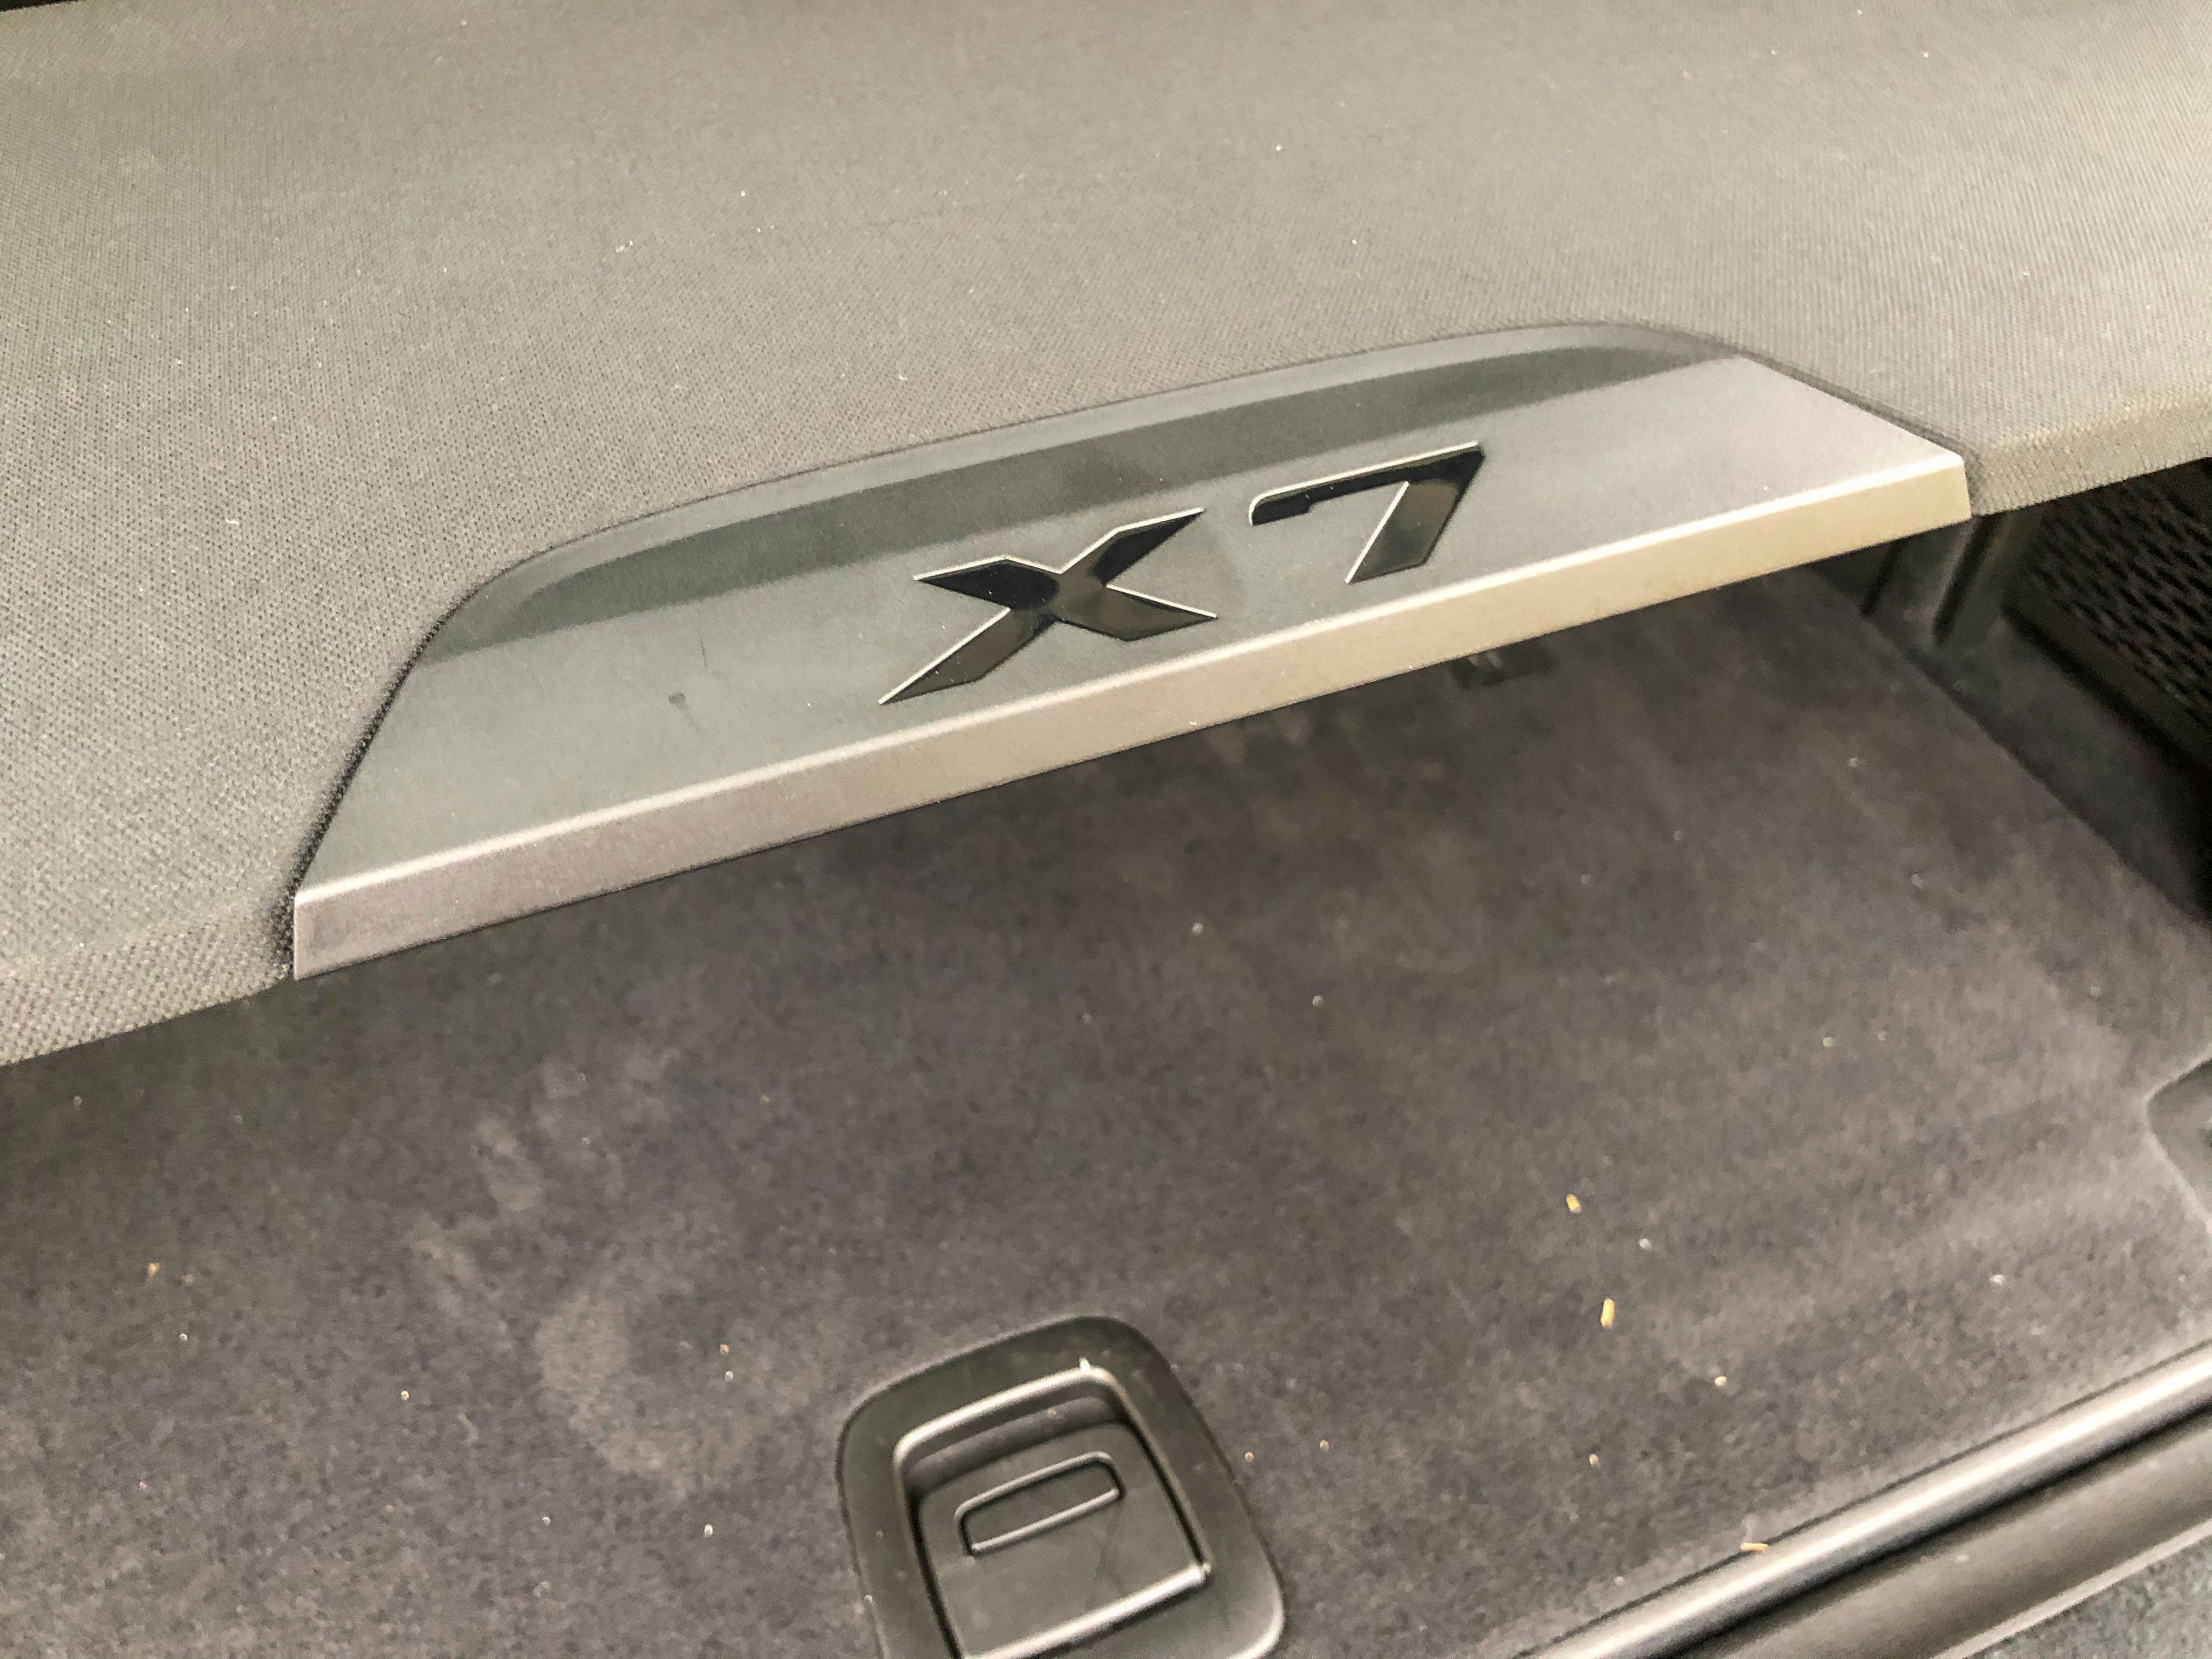 2020 BMW X7 - Driven